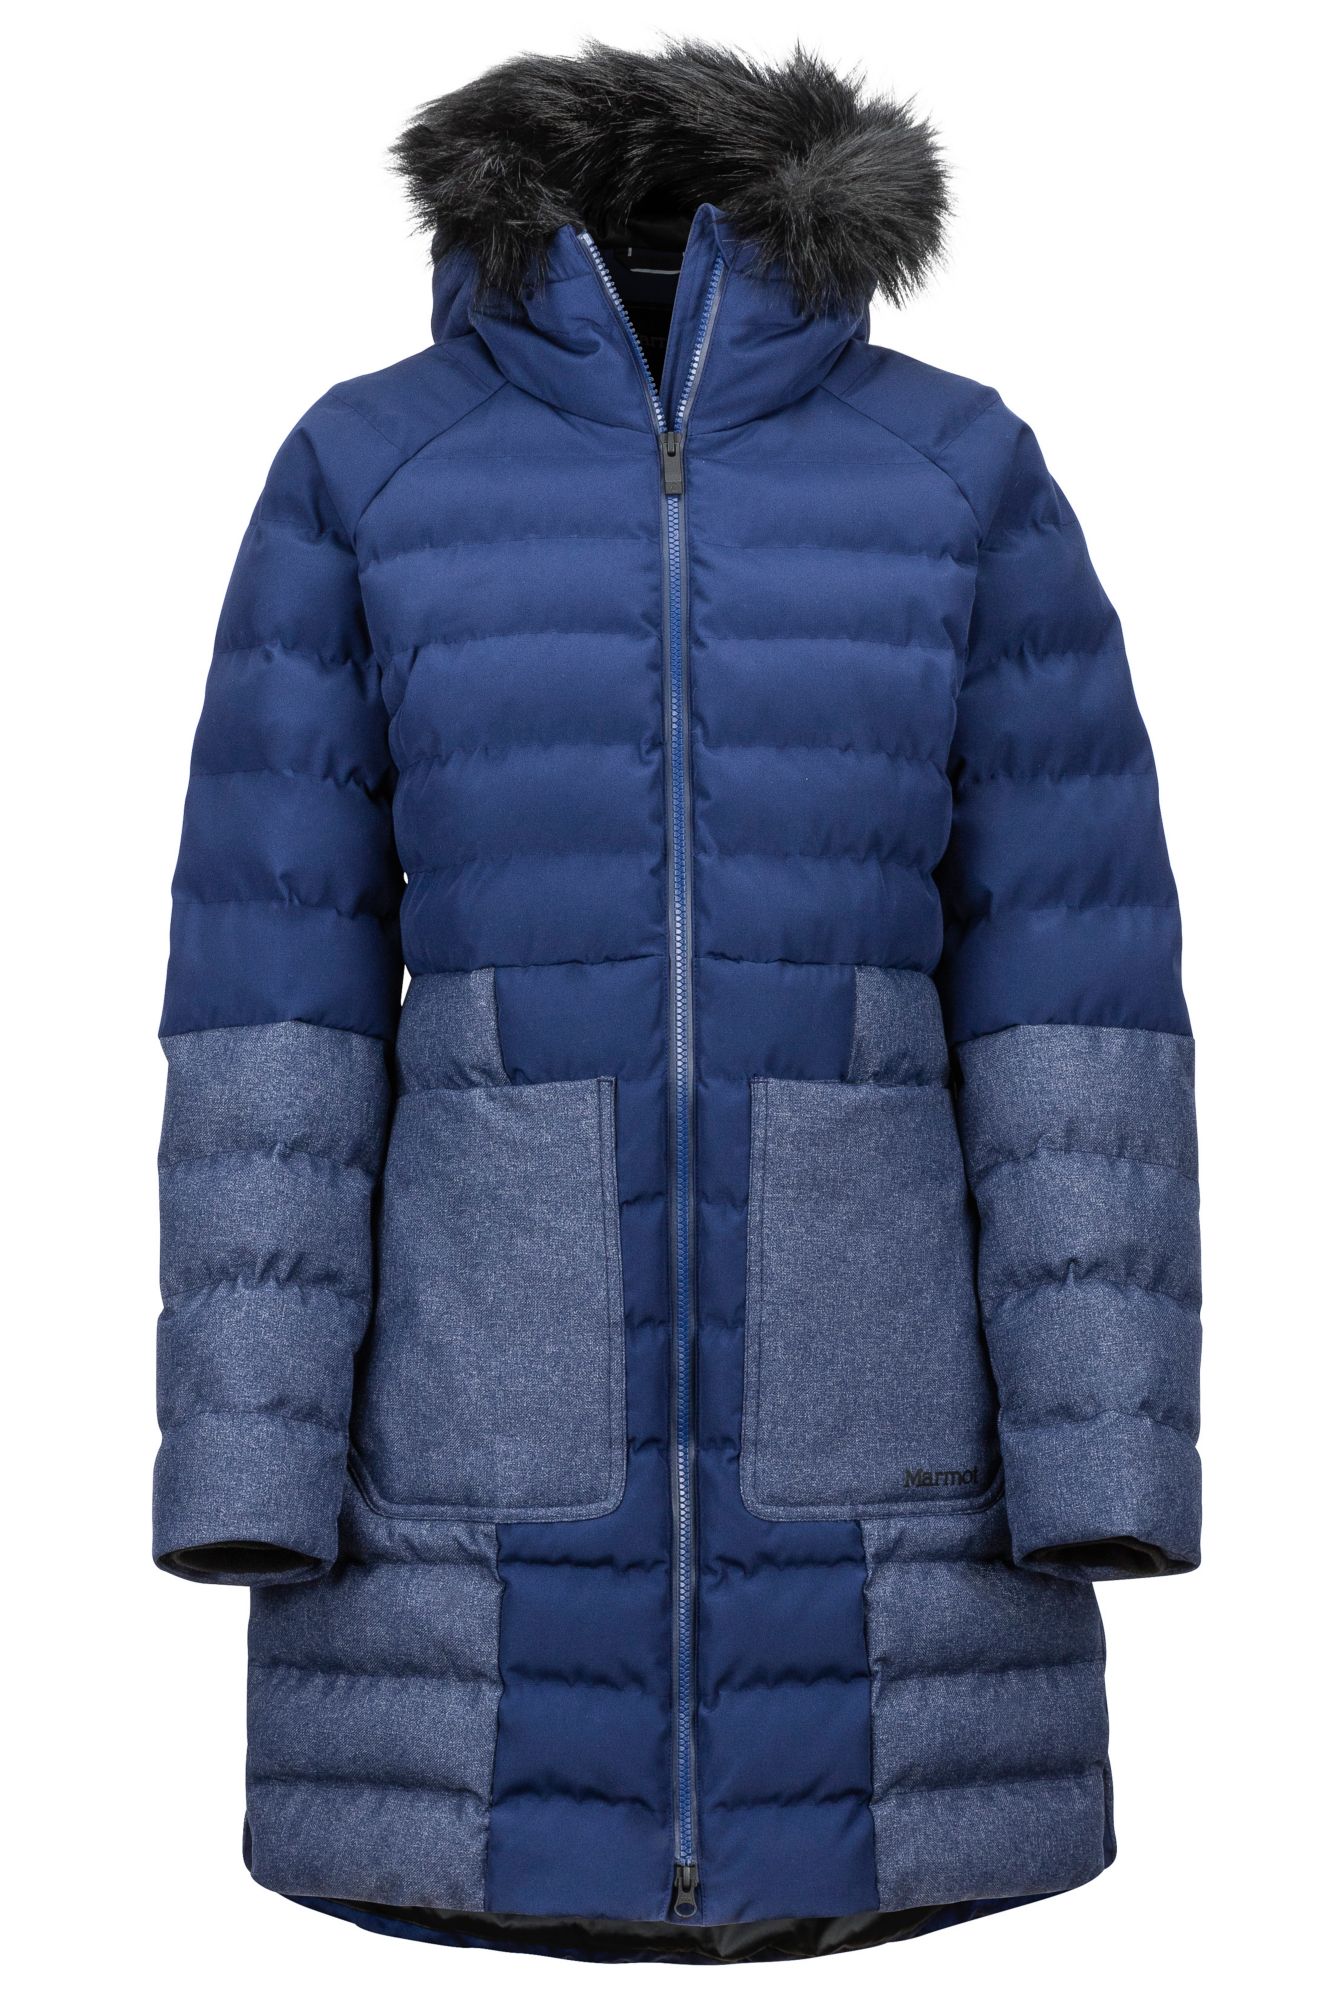 marmot jacket womens sale